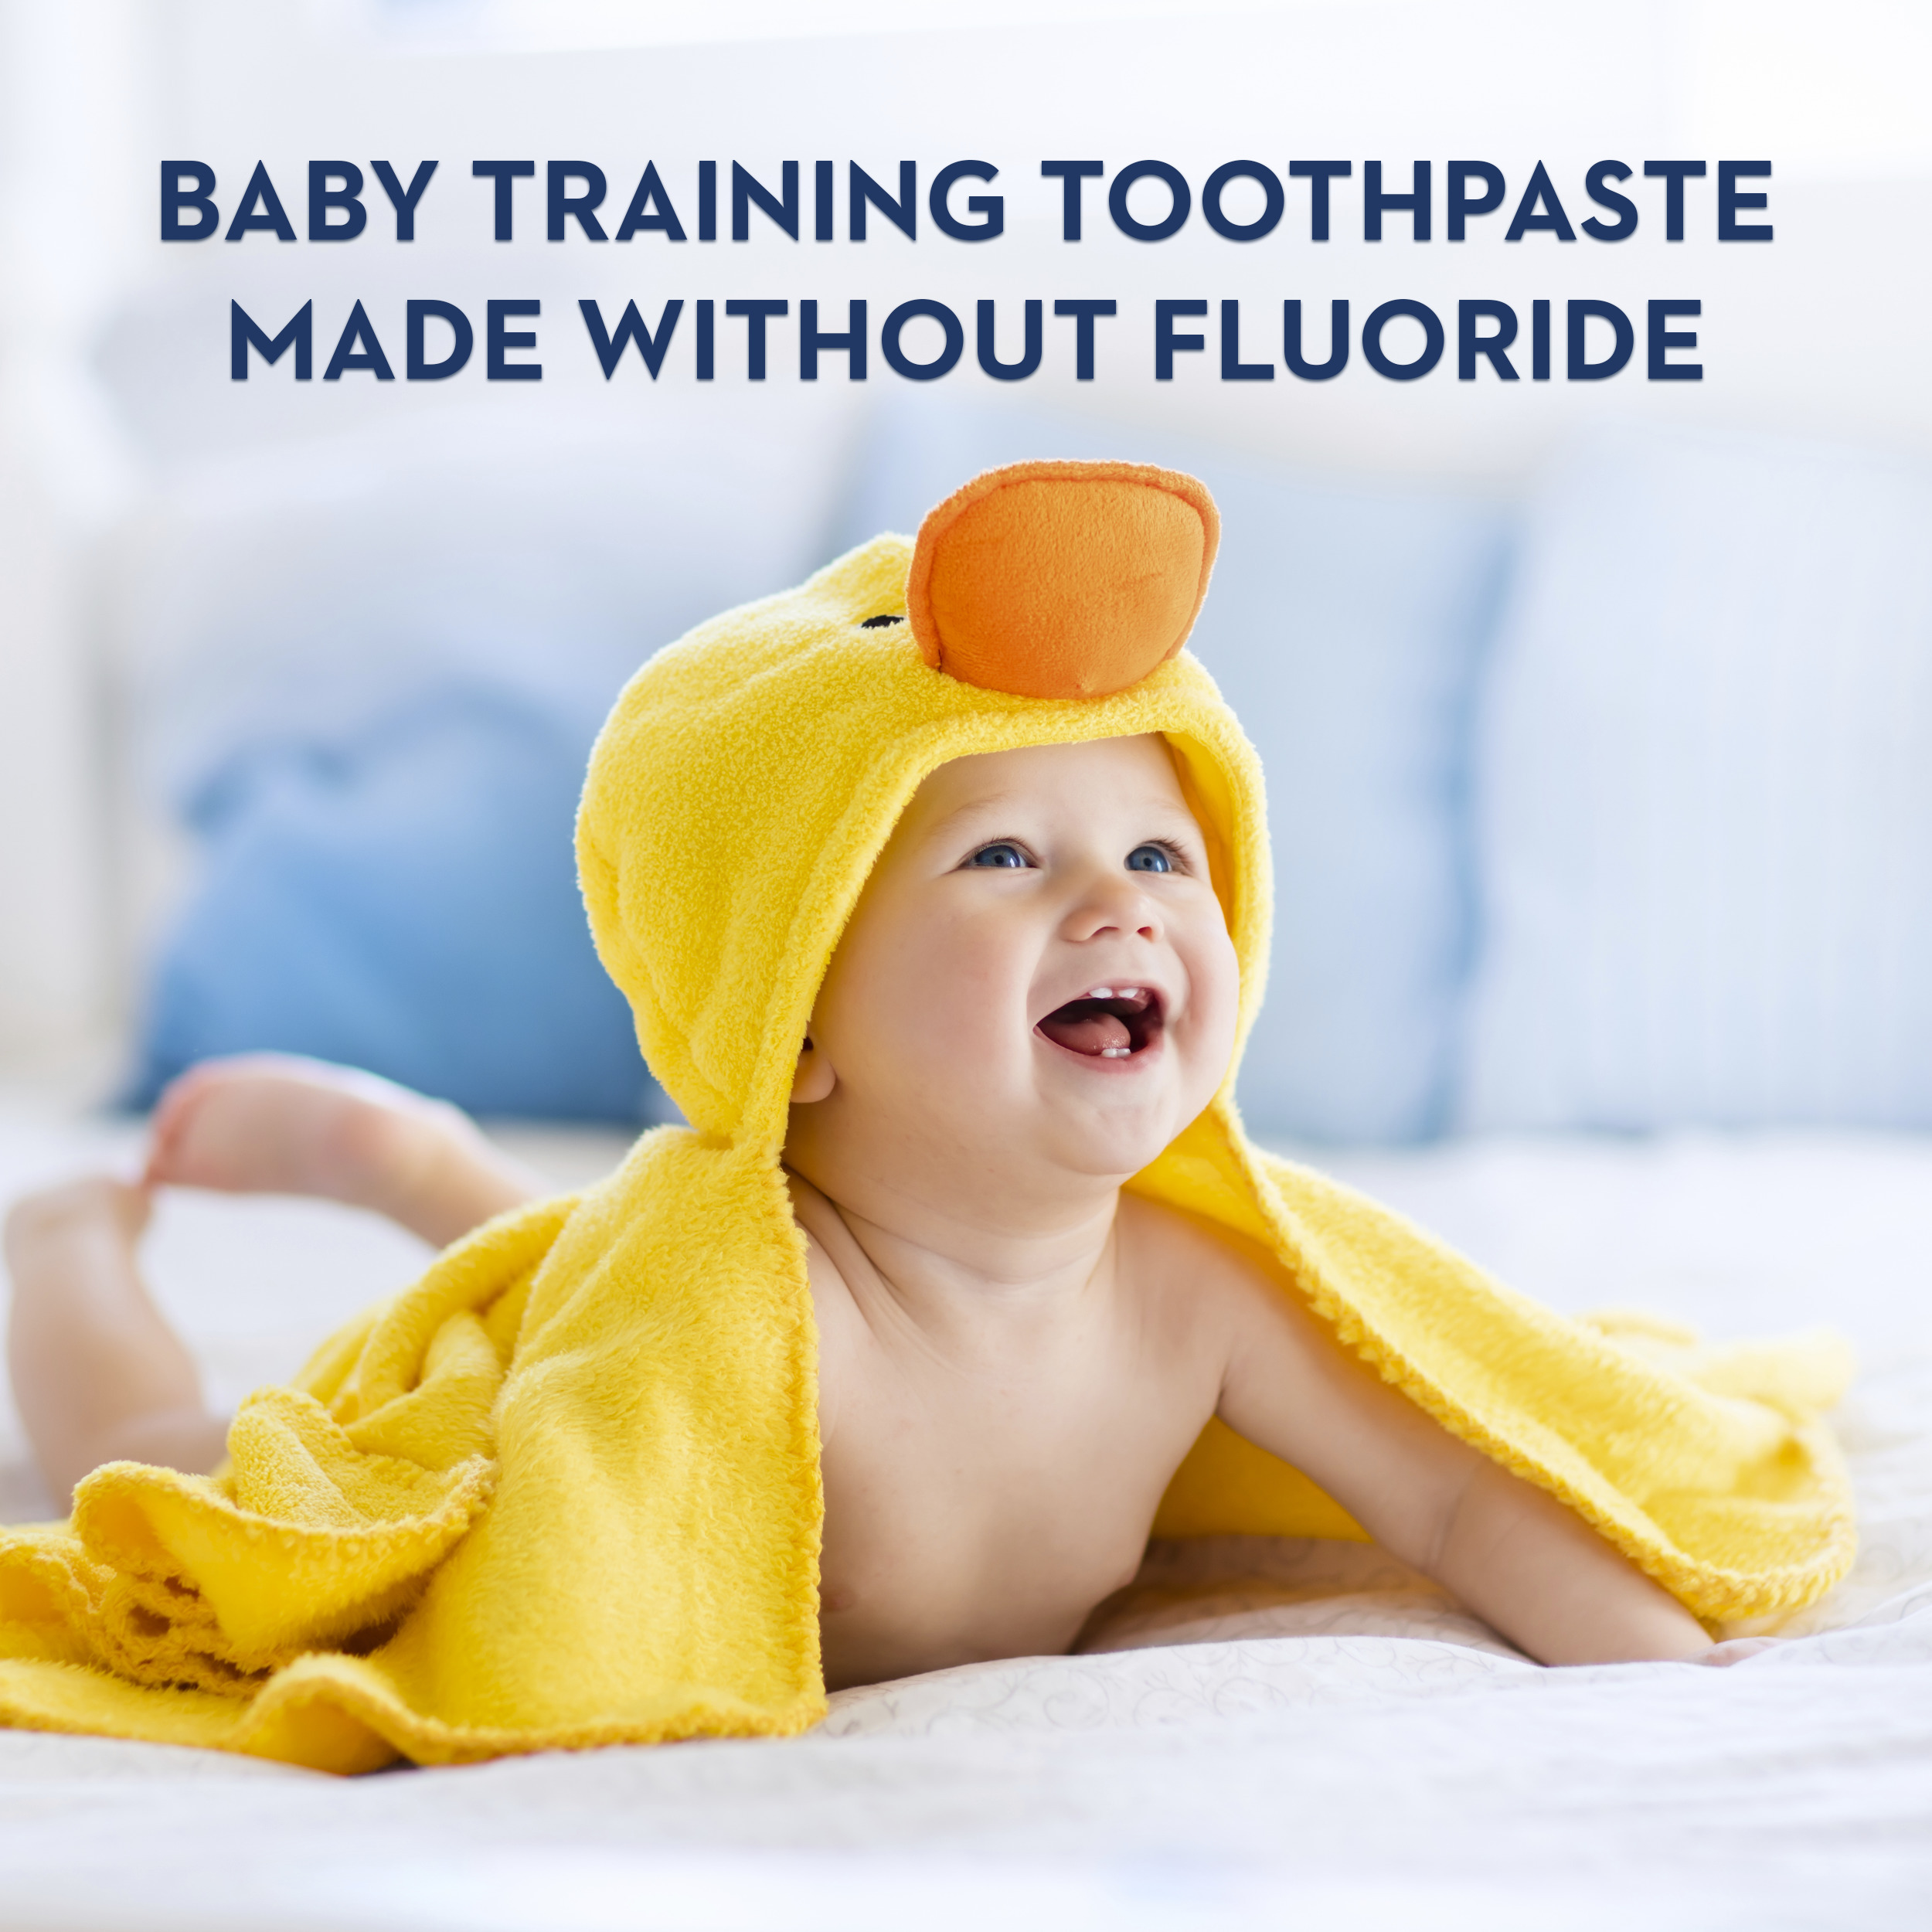 Crest Training Toothpaste and Brush, Fluoride Free, Strawberry 1.6 oz - image 5 of 9